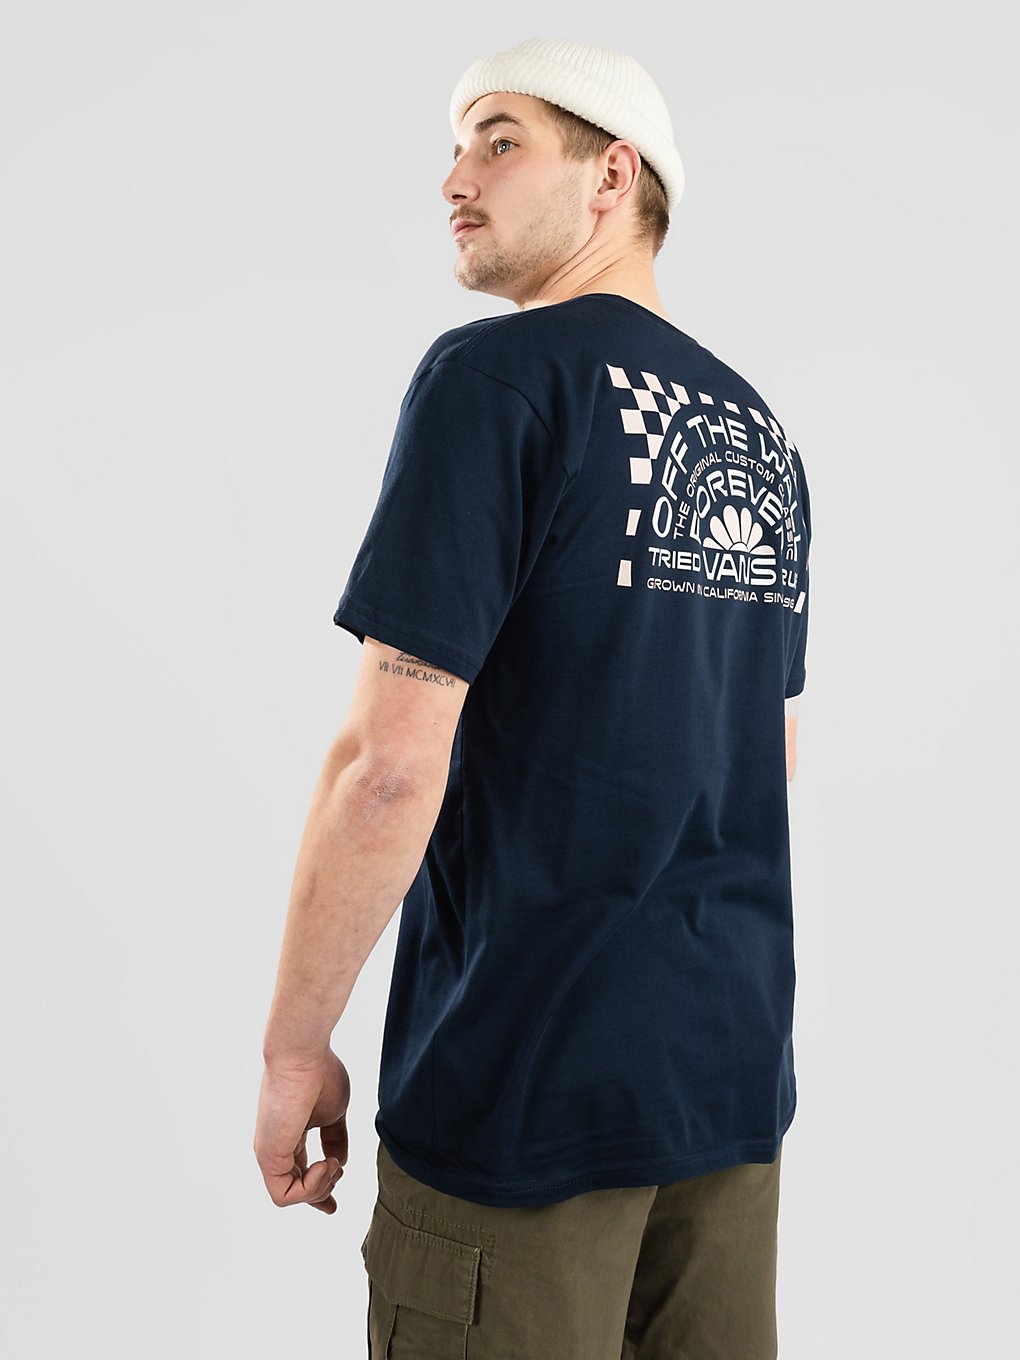 Vans Forever T-Shirt navy kaufen